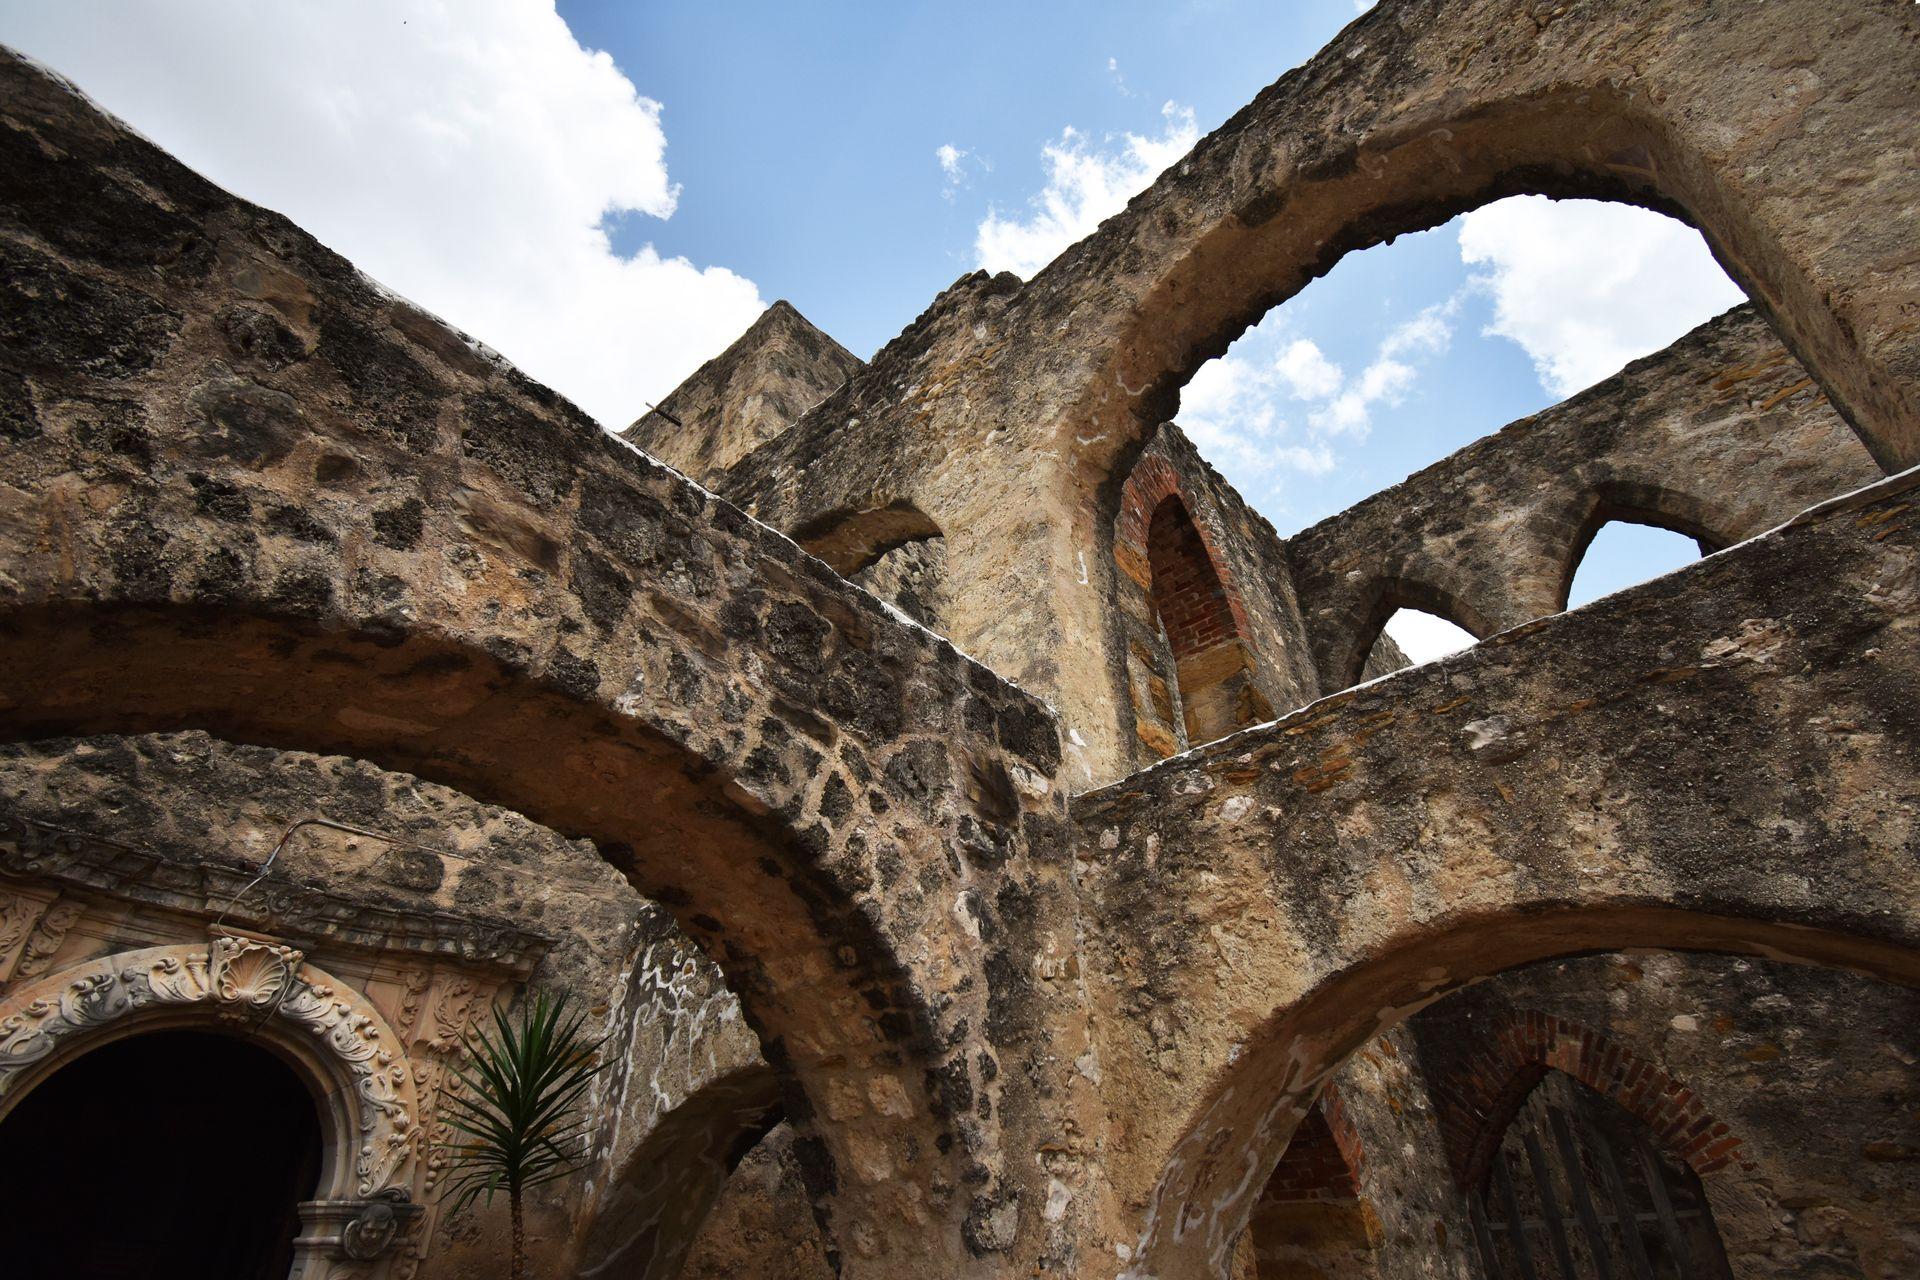 Several arches at Mission San Jose in San Antonio.